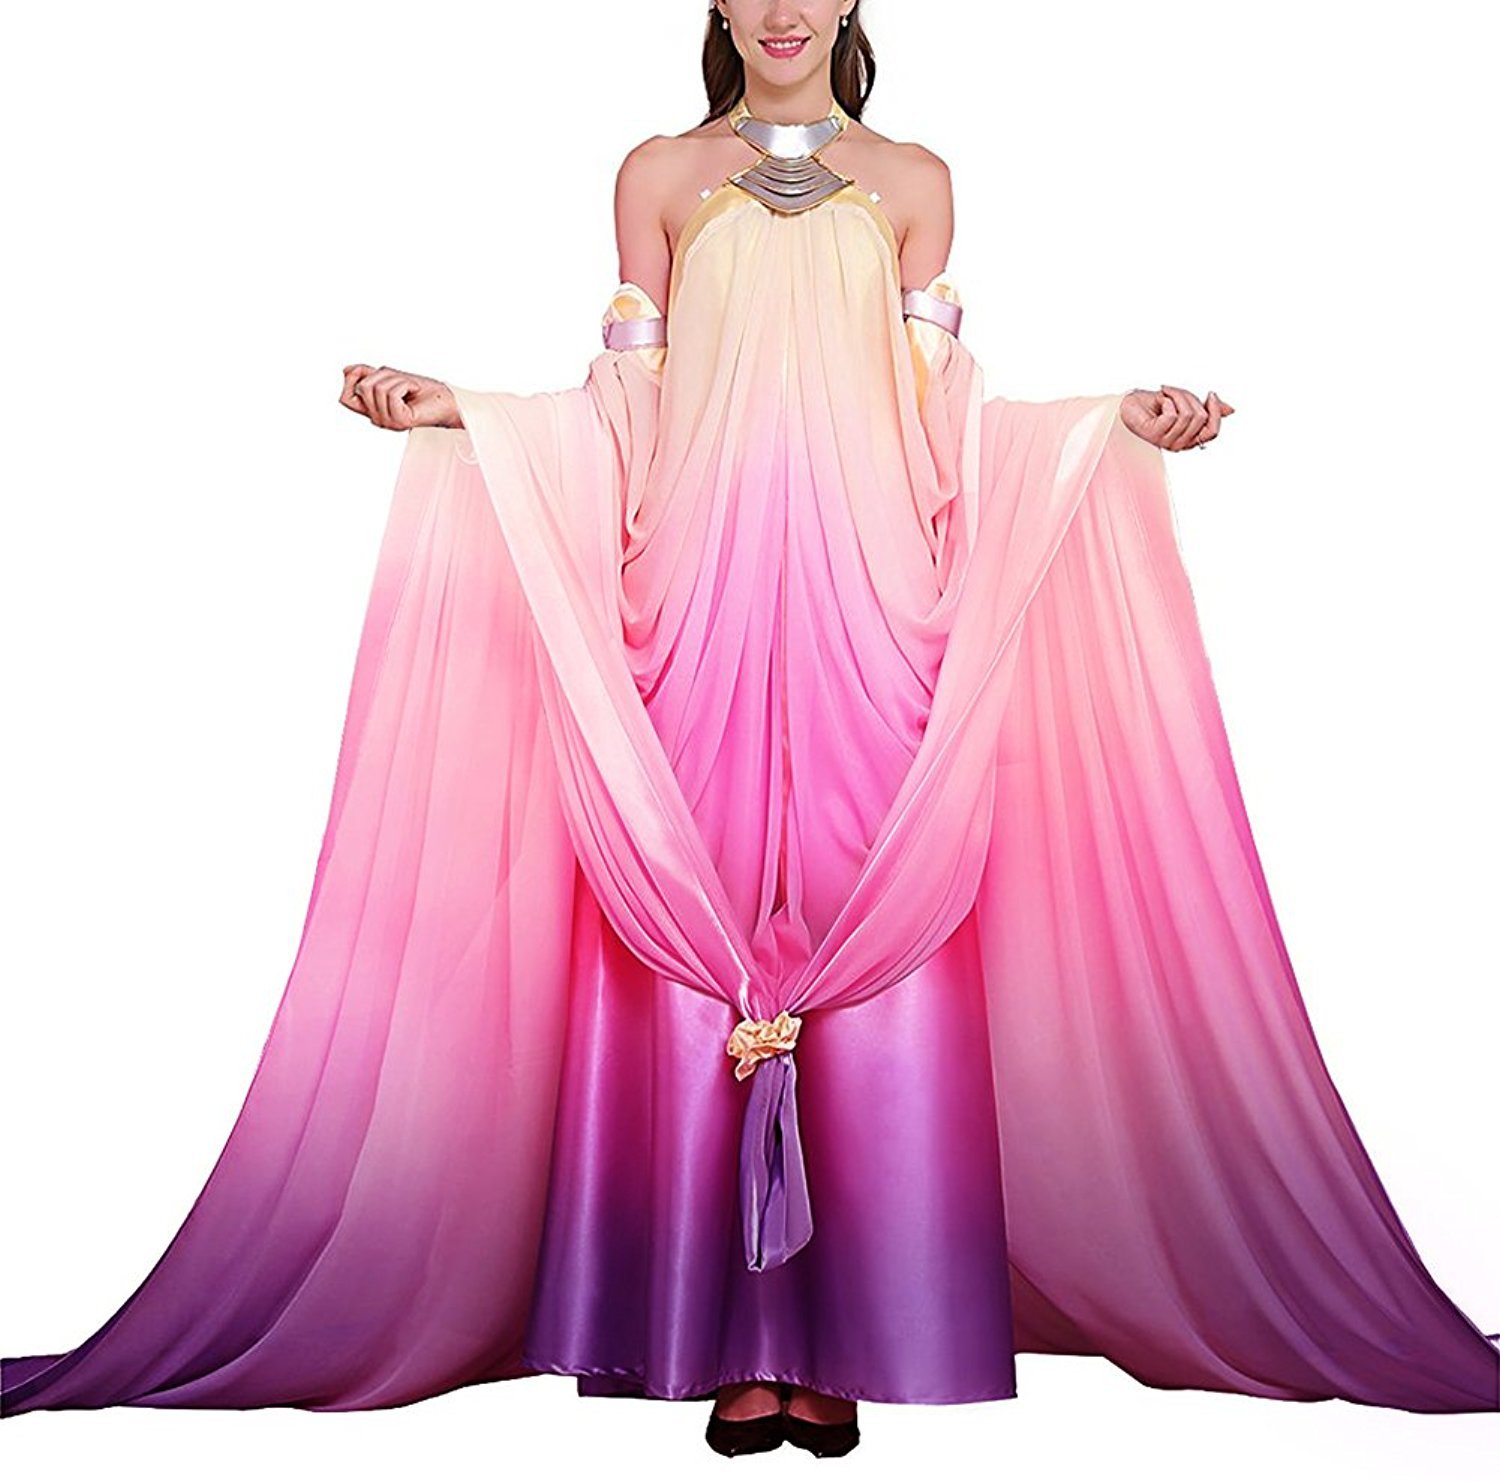 Cosplay Star Wars 3 Padmé Naberrie Amidala Cosplay Costume Dress.